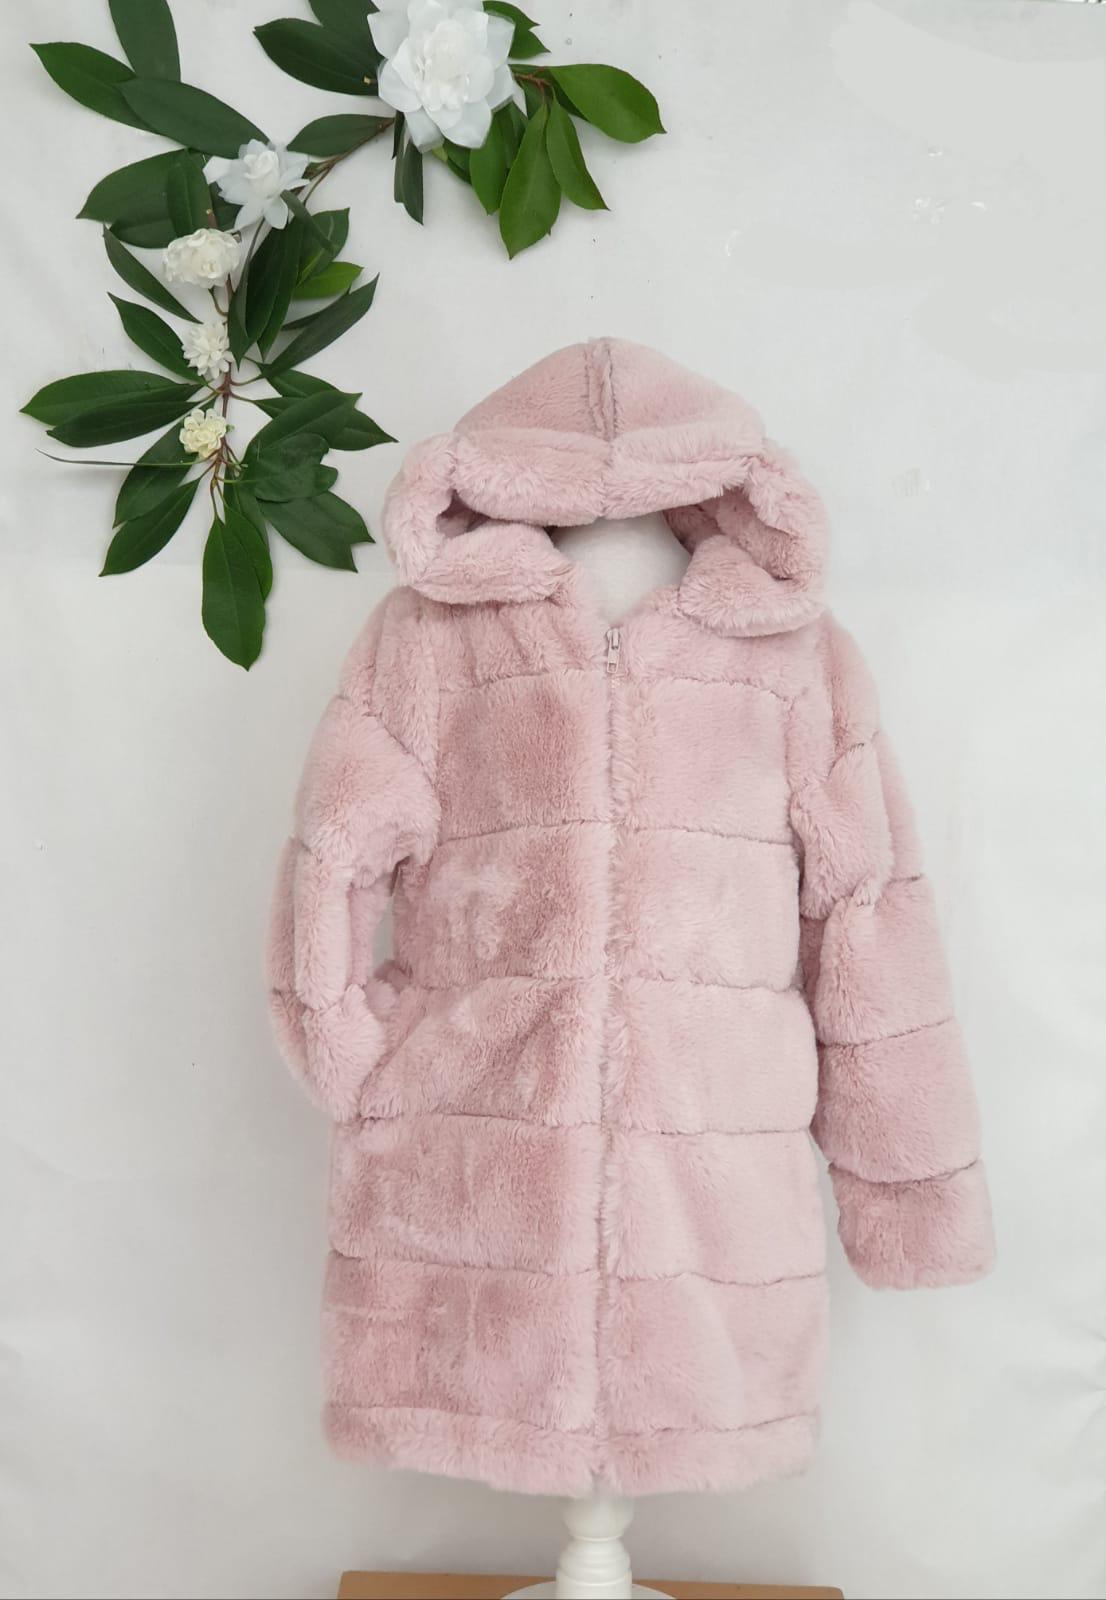 manteau capuche rose